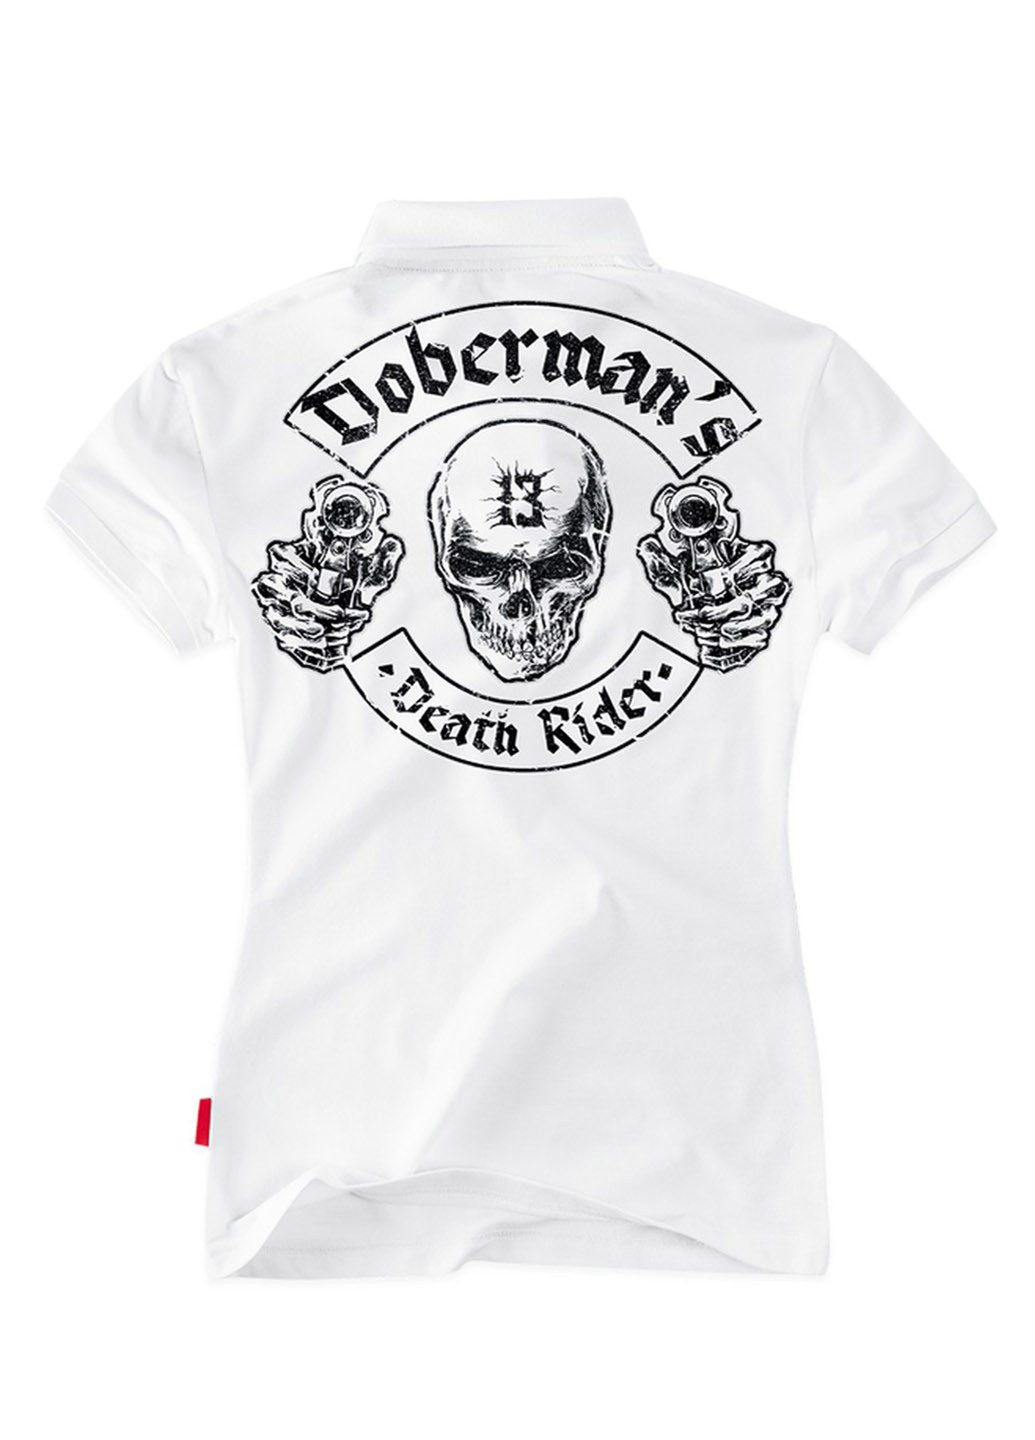 Белая женская футболка-футболка поло dobermans death rider colt tspd141wt Dobermans Aggressive